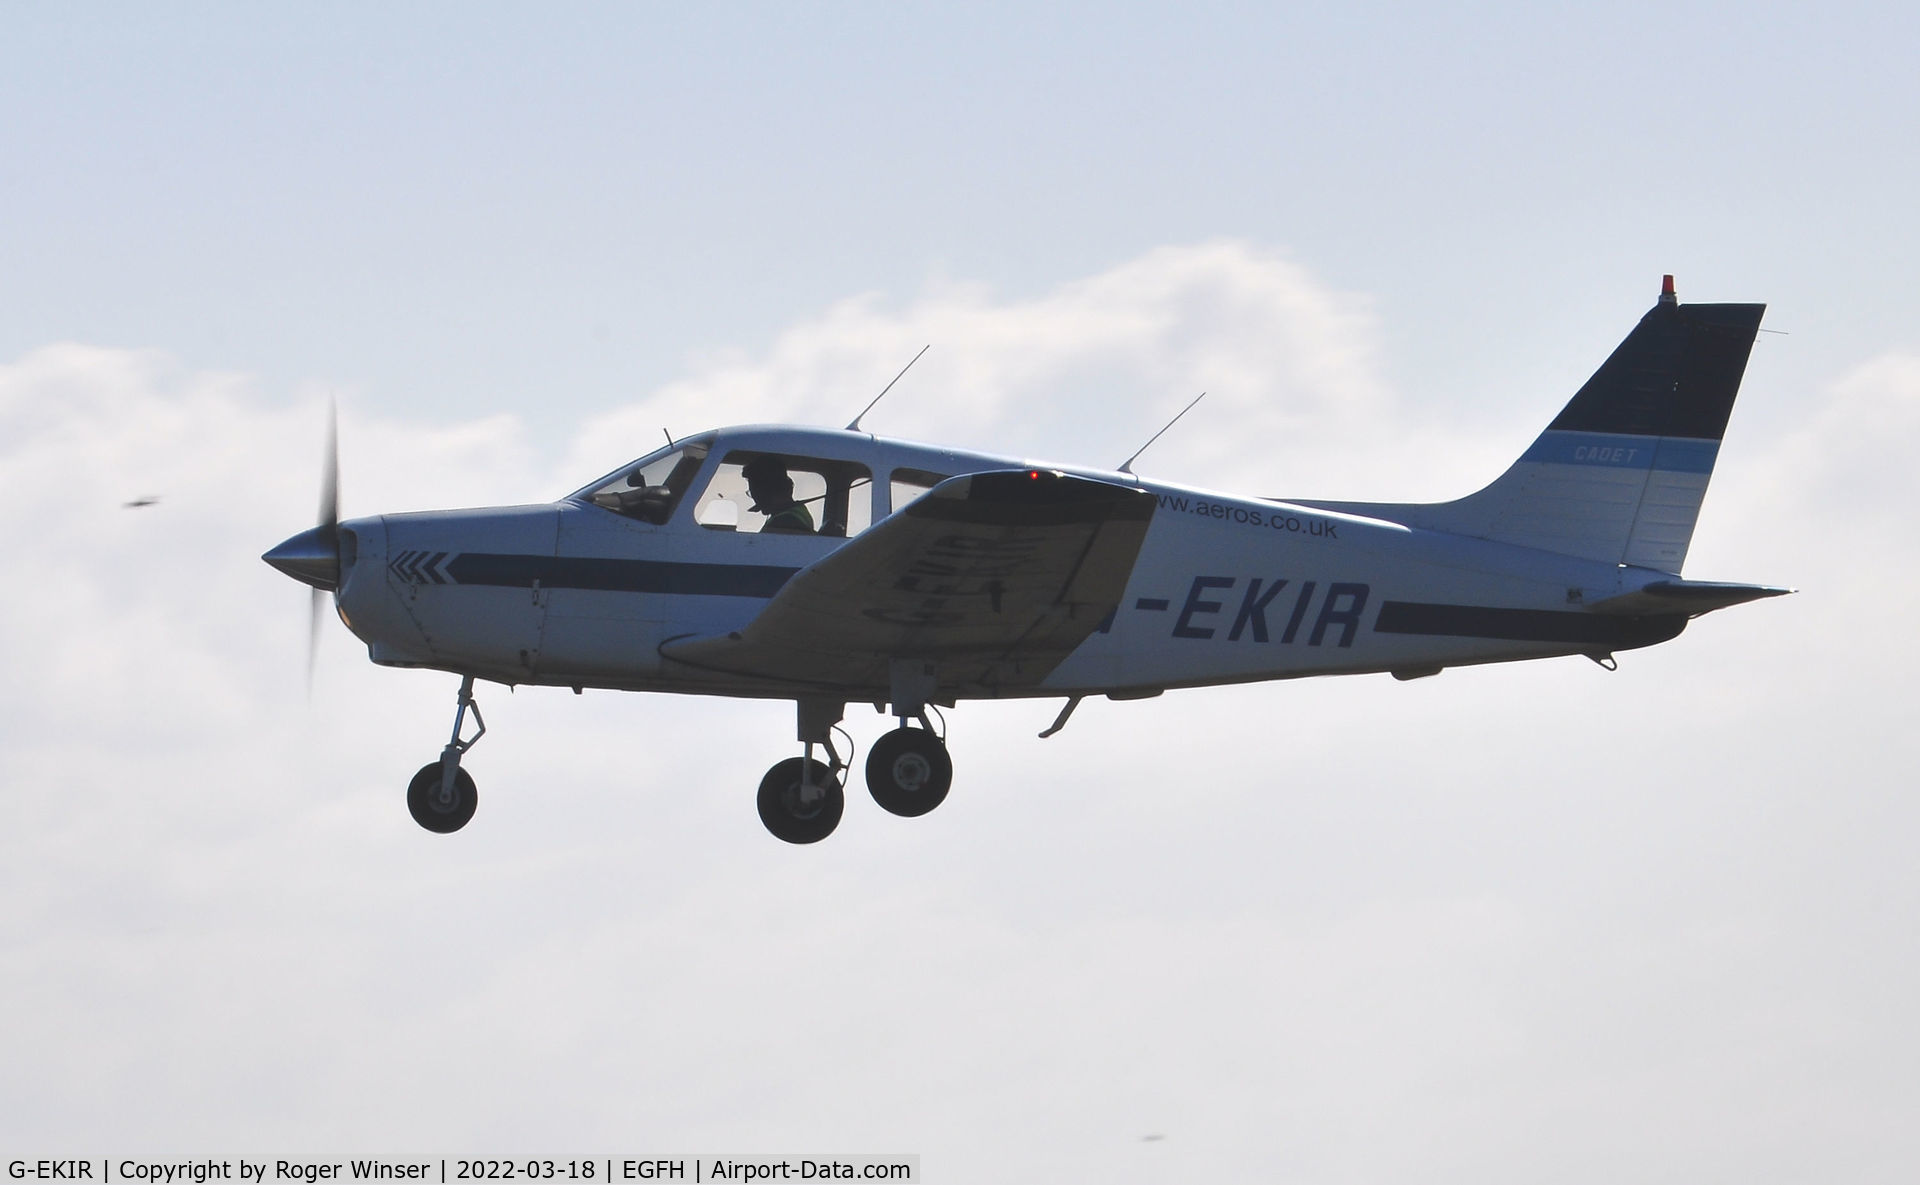 G-EKIR, 1989 Piper PA-28-161 Cadet C/N 28-41157, Visiting Cadet departing Runway 10.